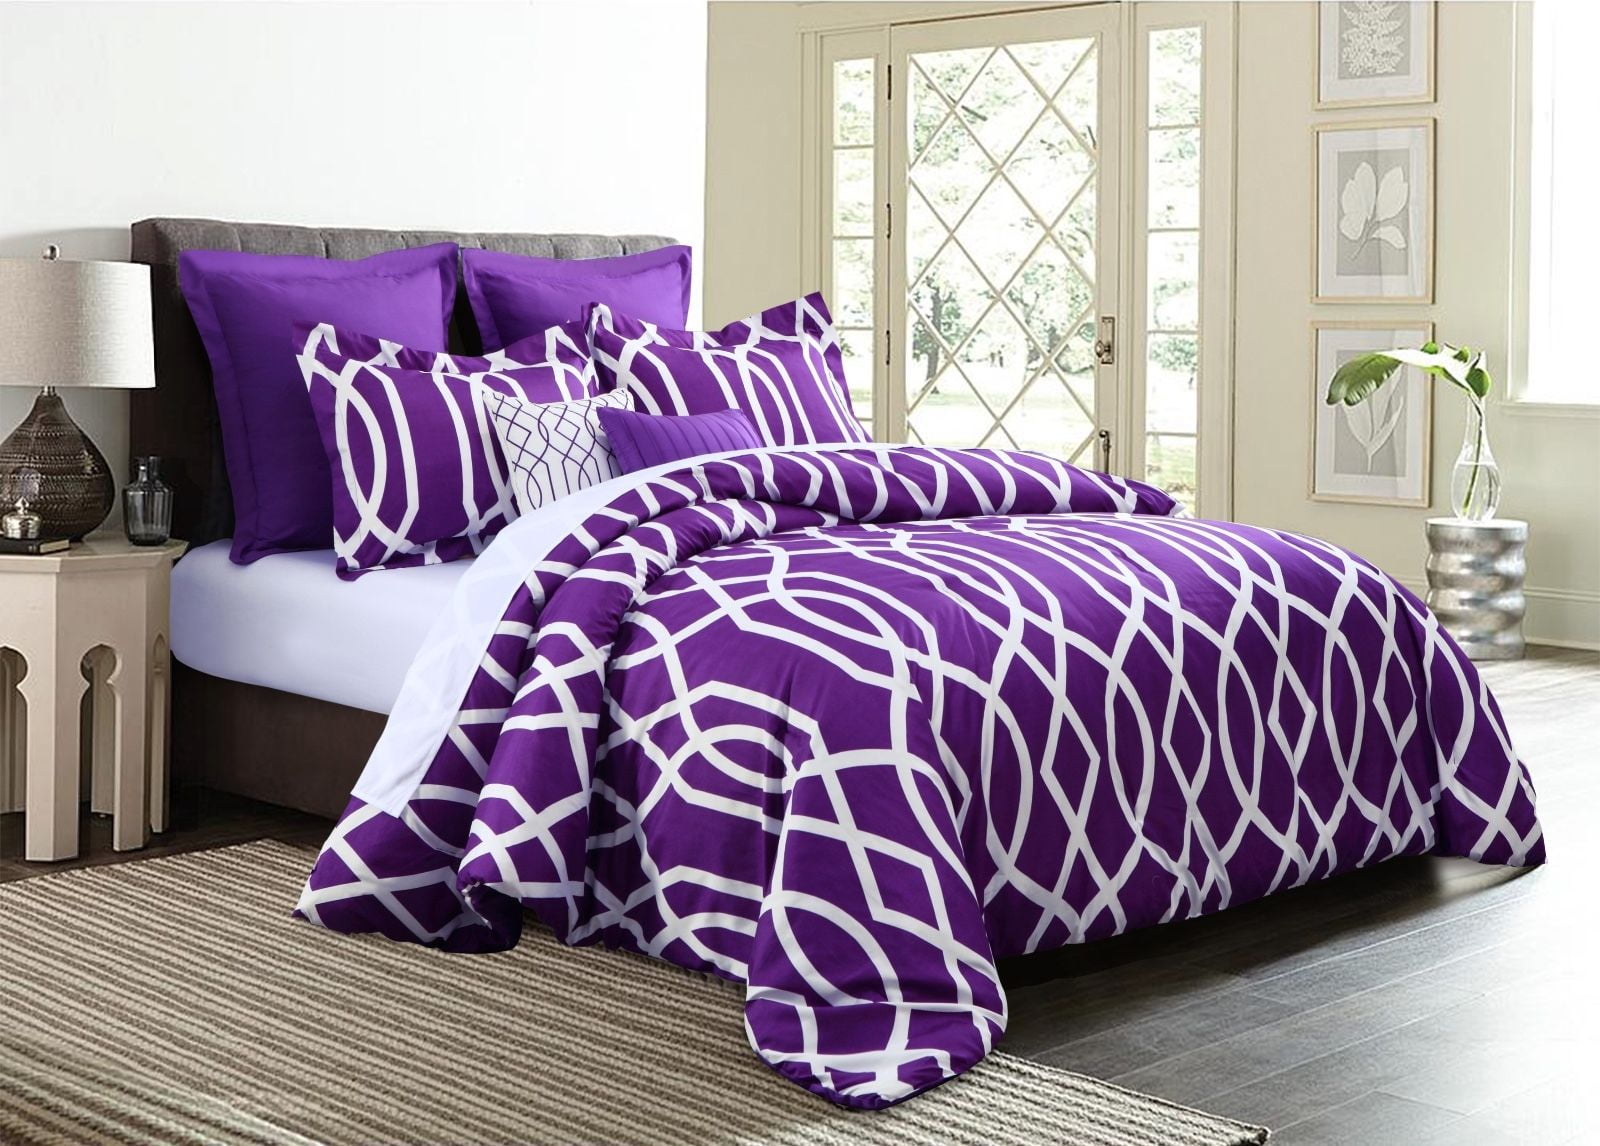 king size purple mattress cover